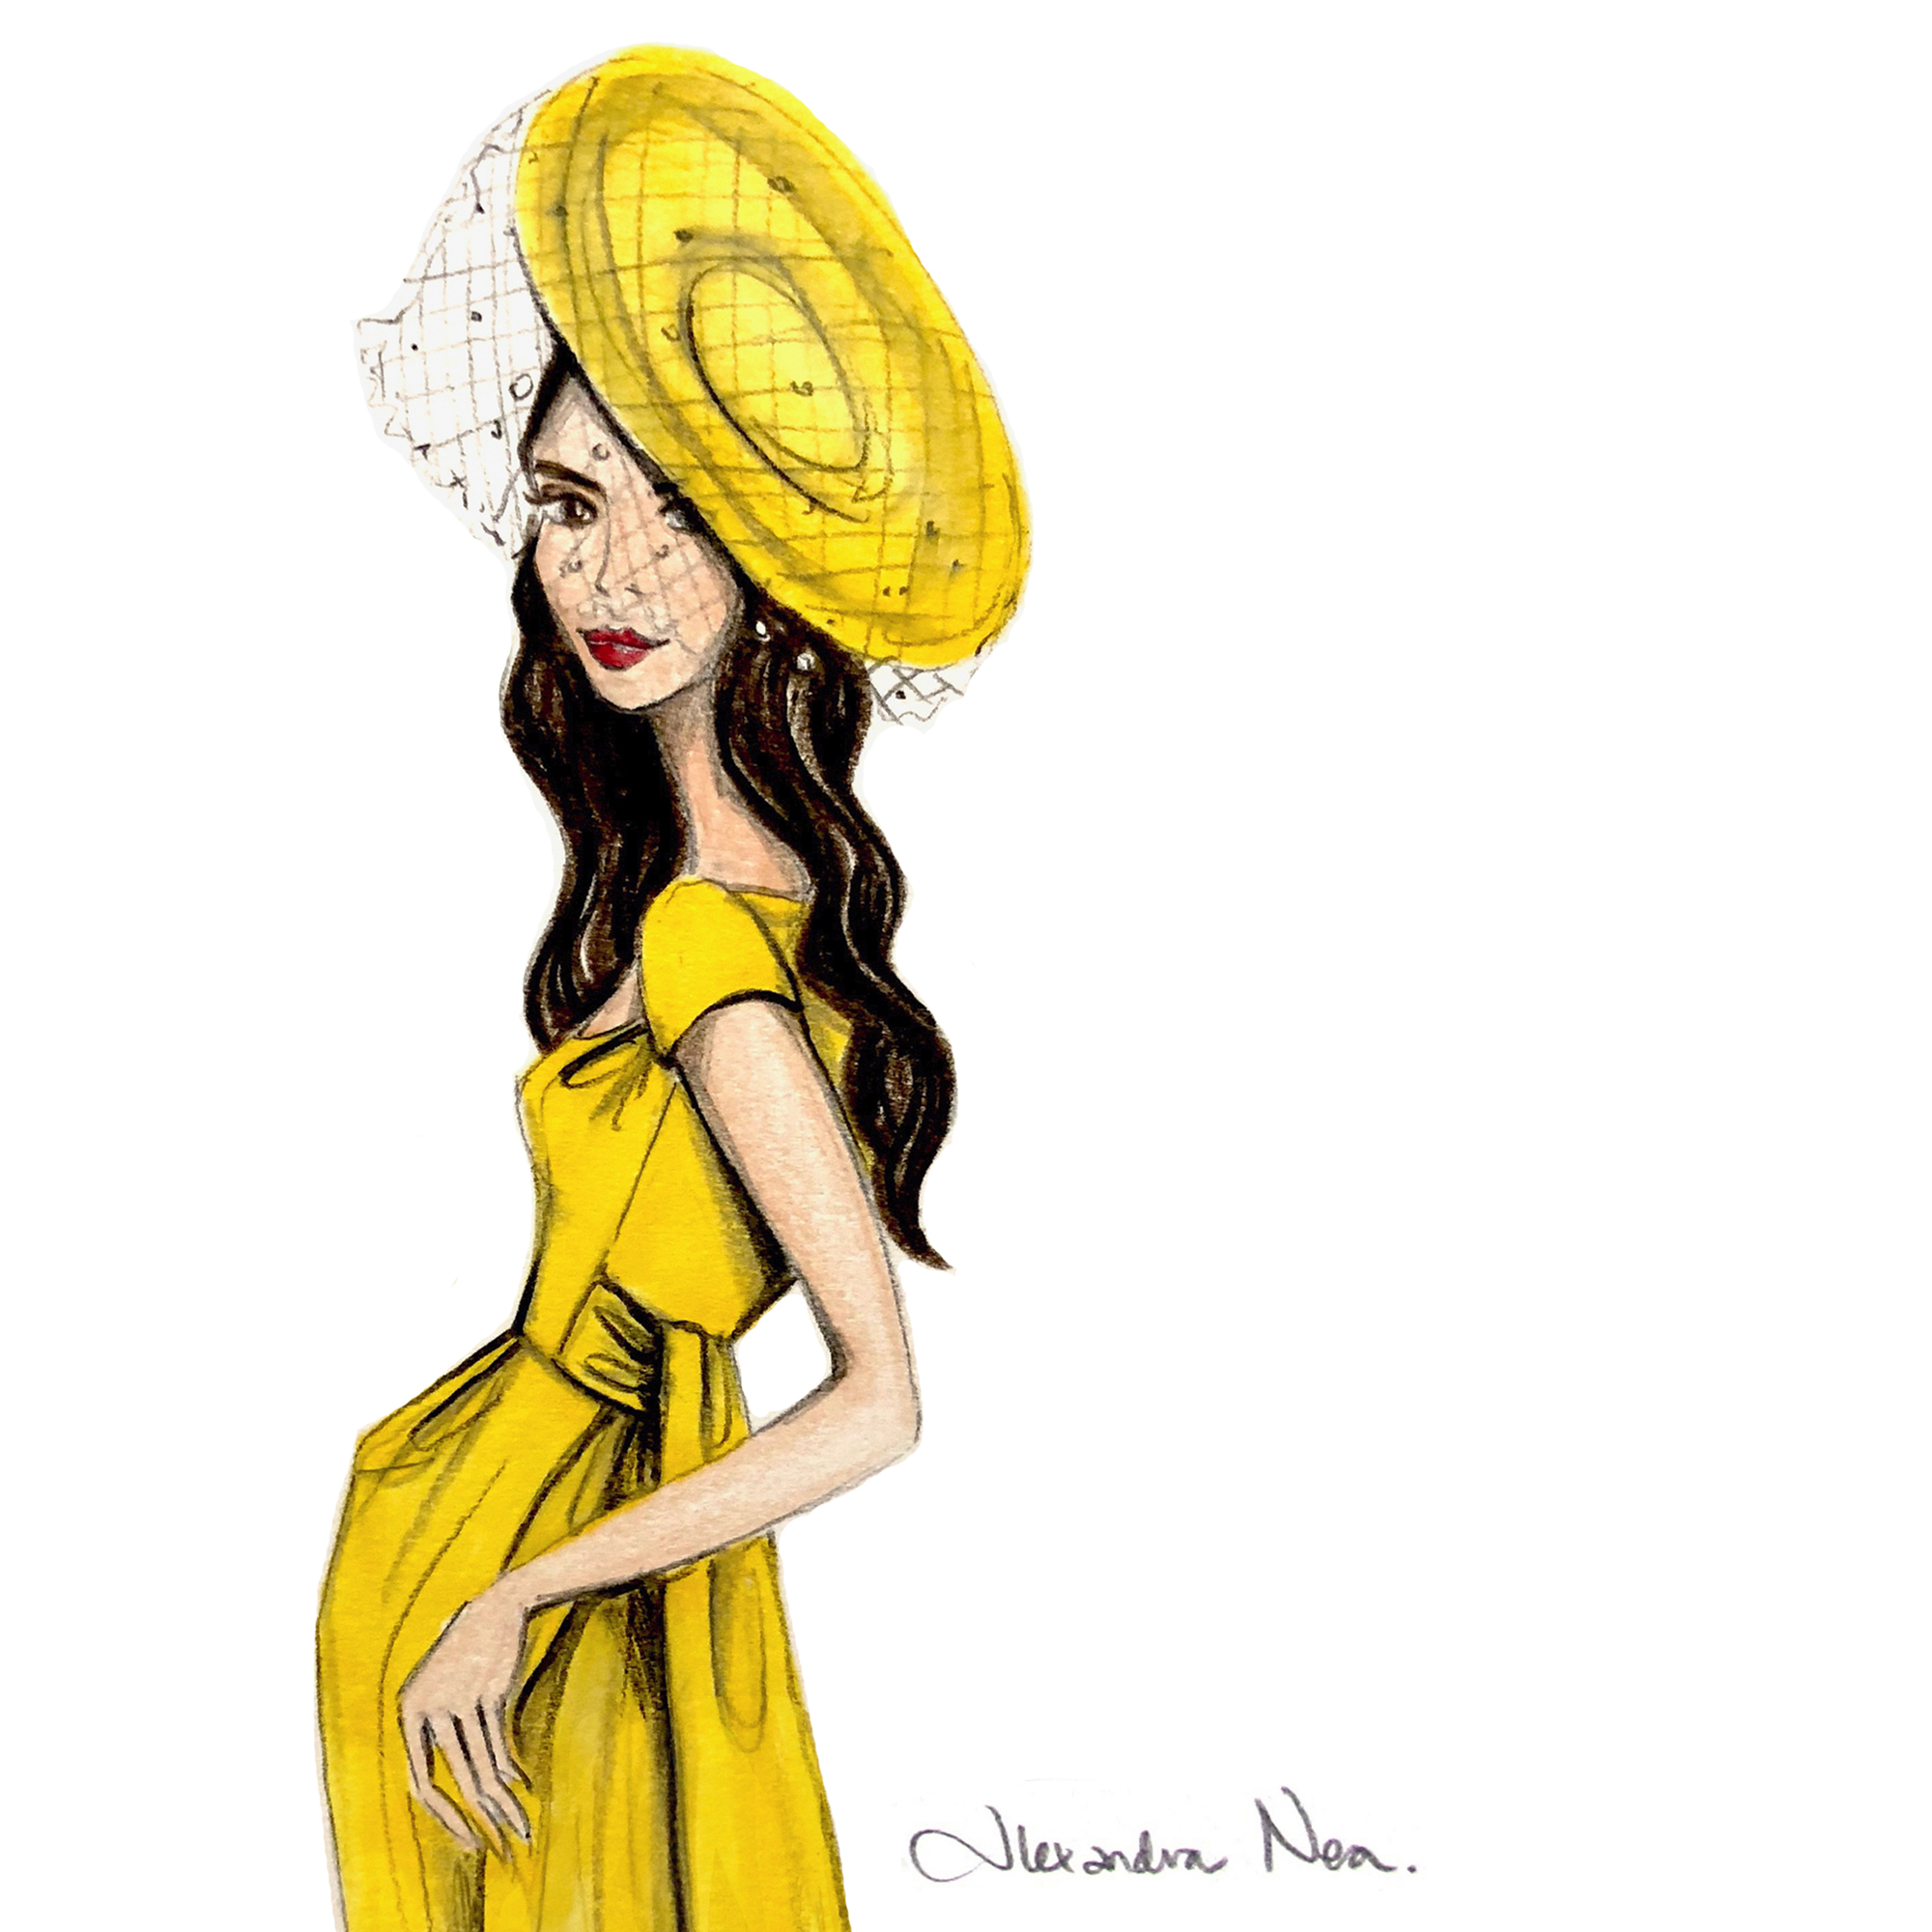 Illustration of royal wedding guest Amal Clooney created by illustrator Alexandra Nea (Alexandra Nea)